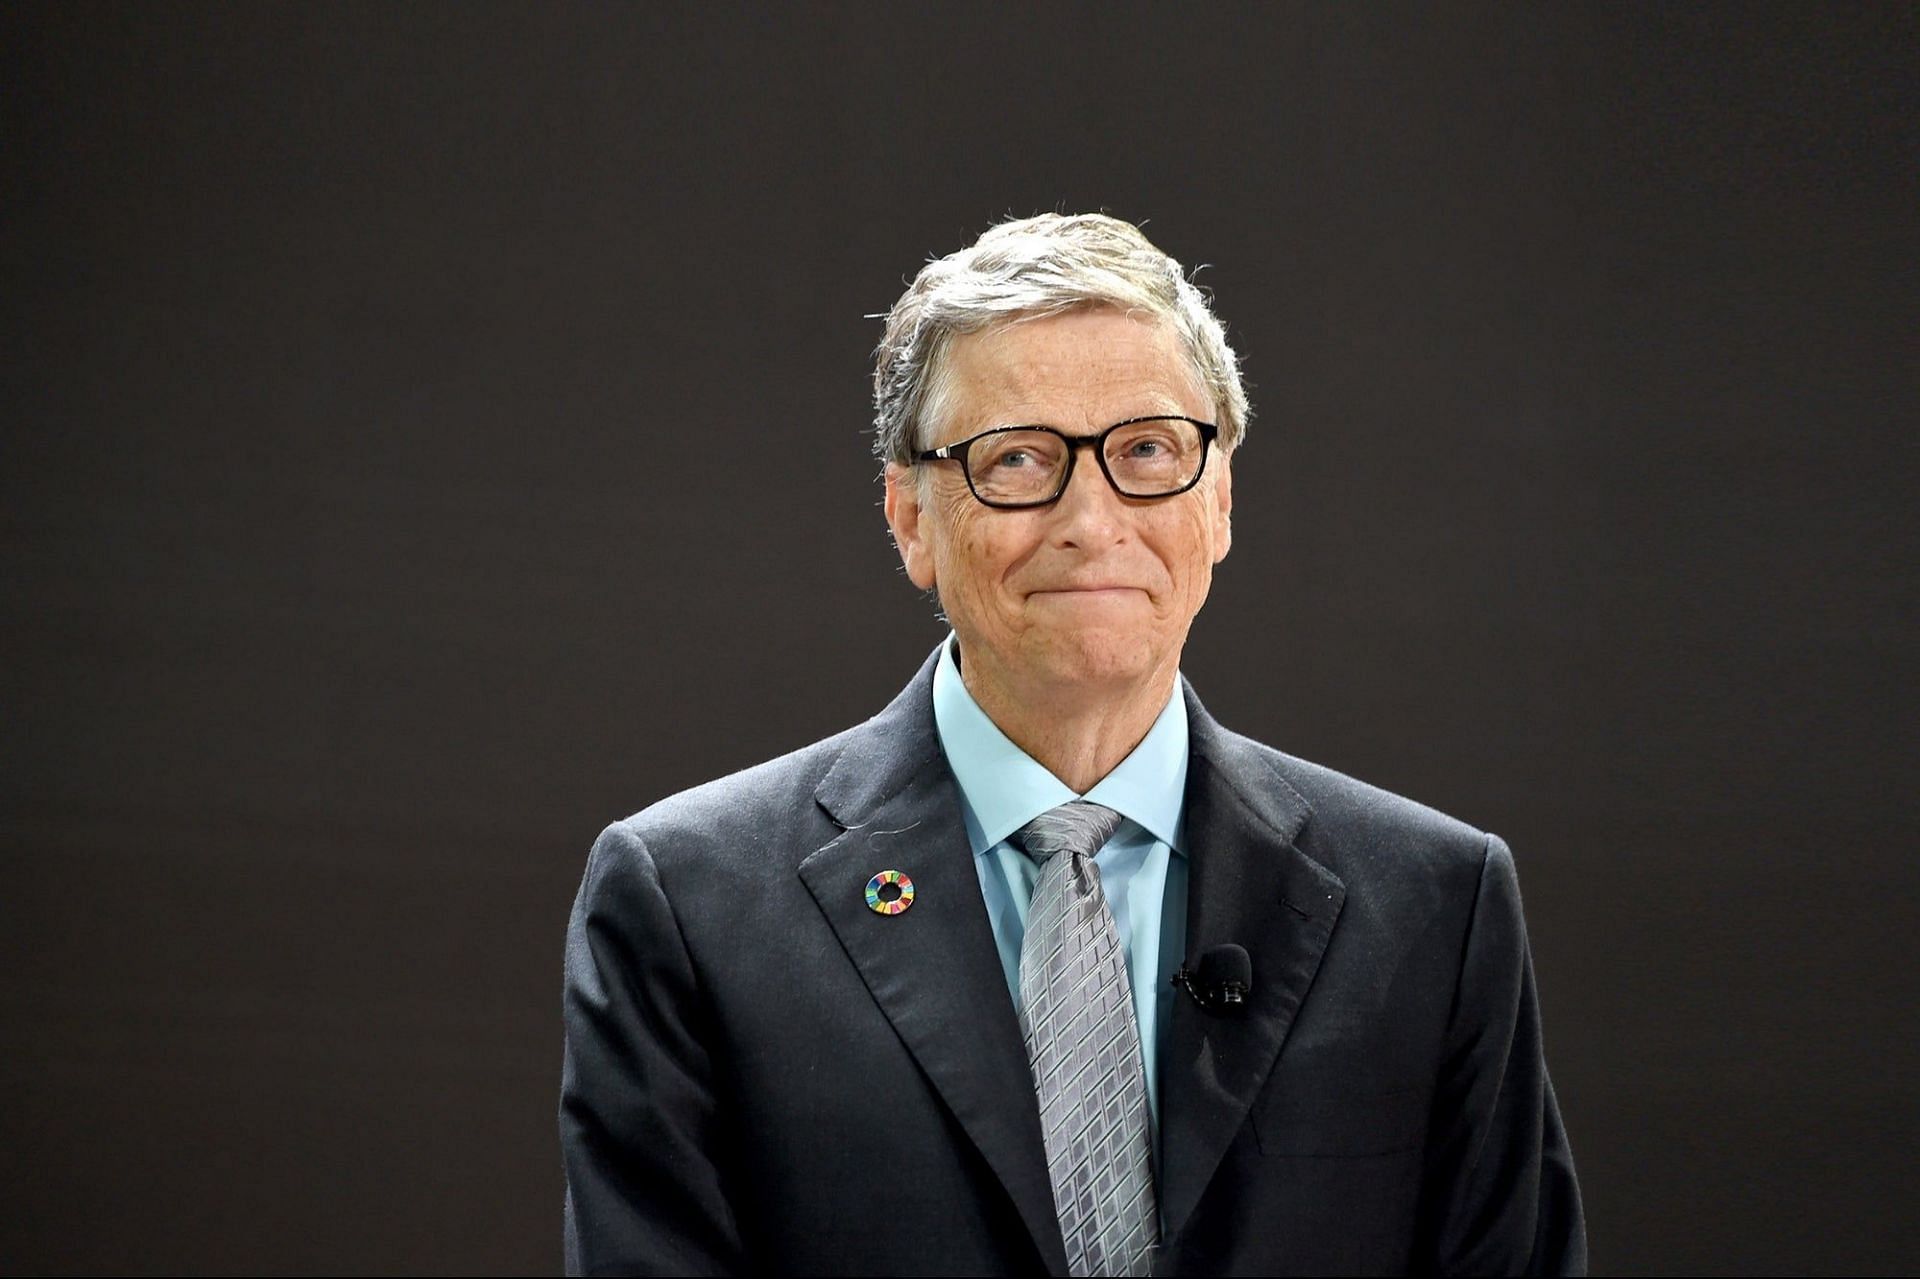 Bill Gates (Image via Entrepreneur)